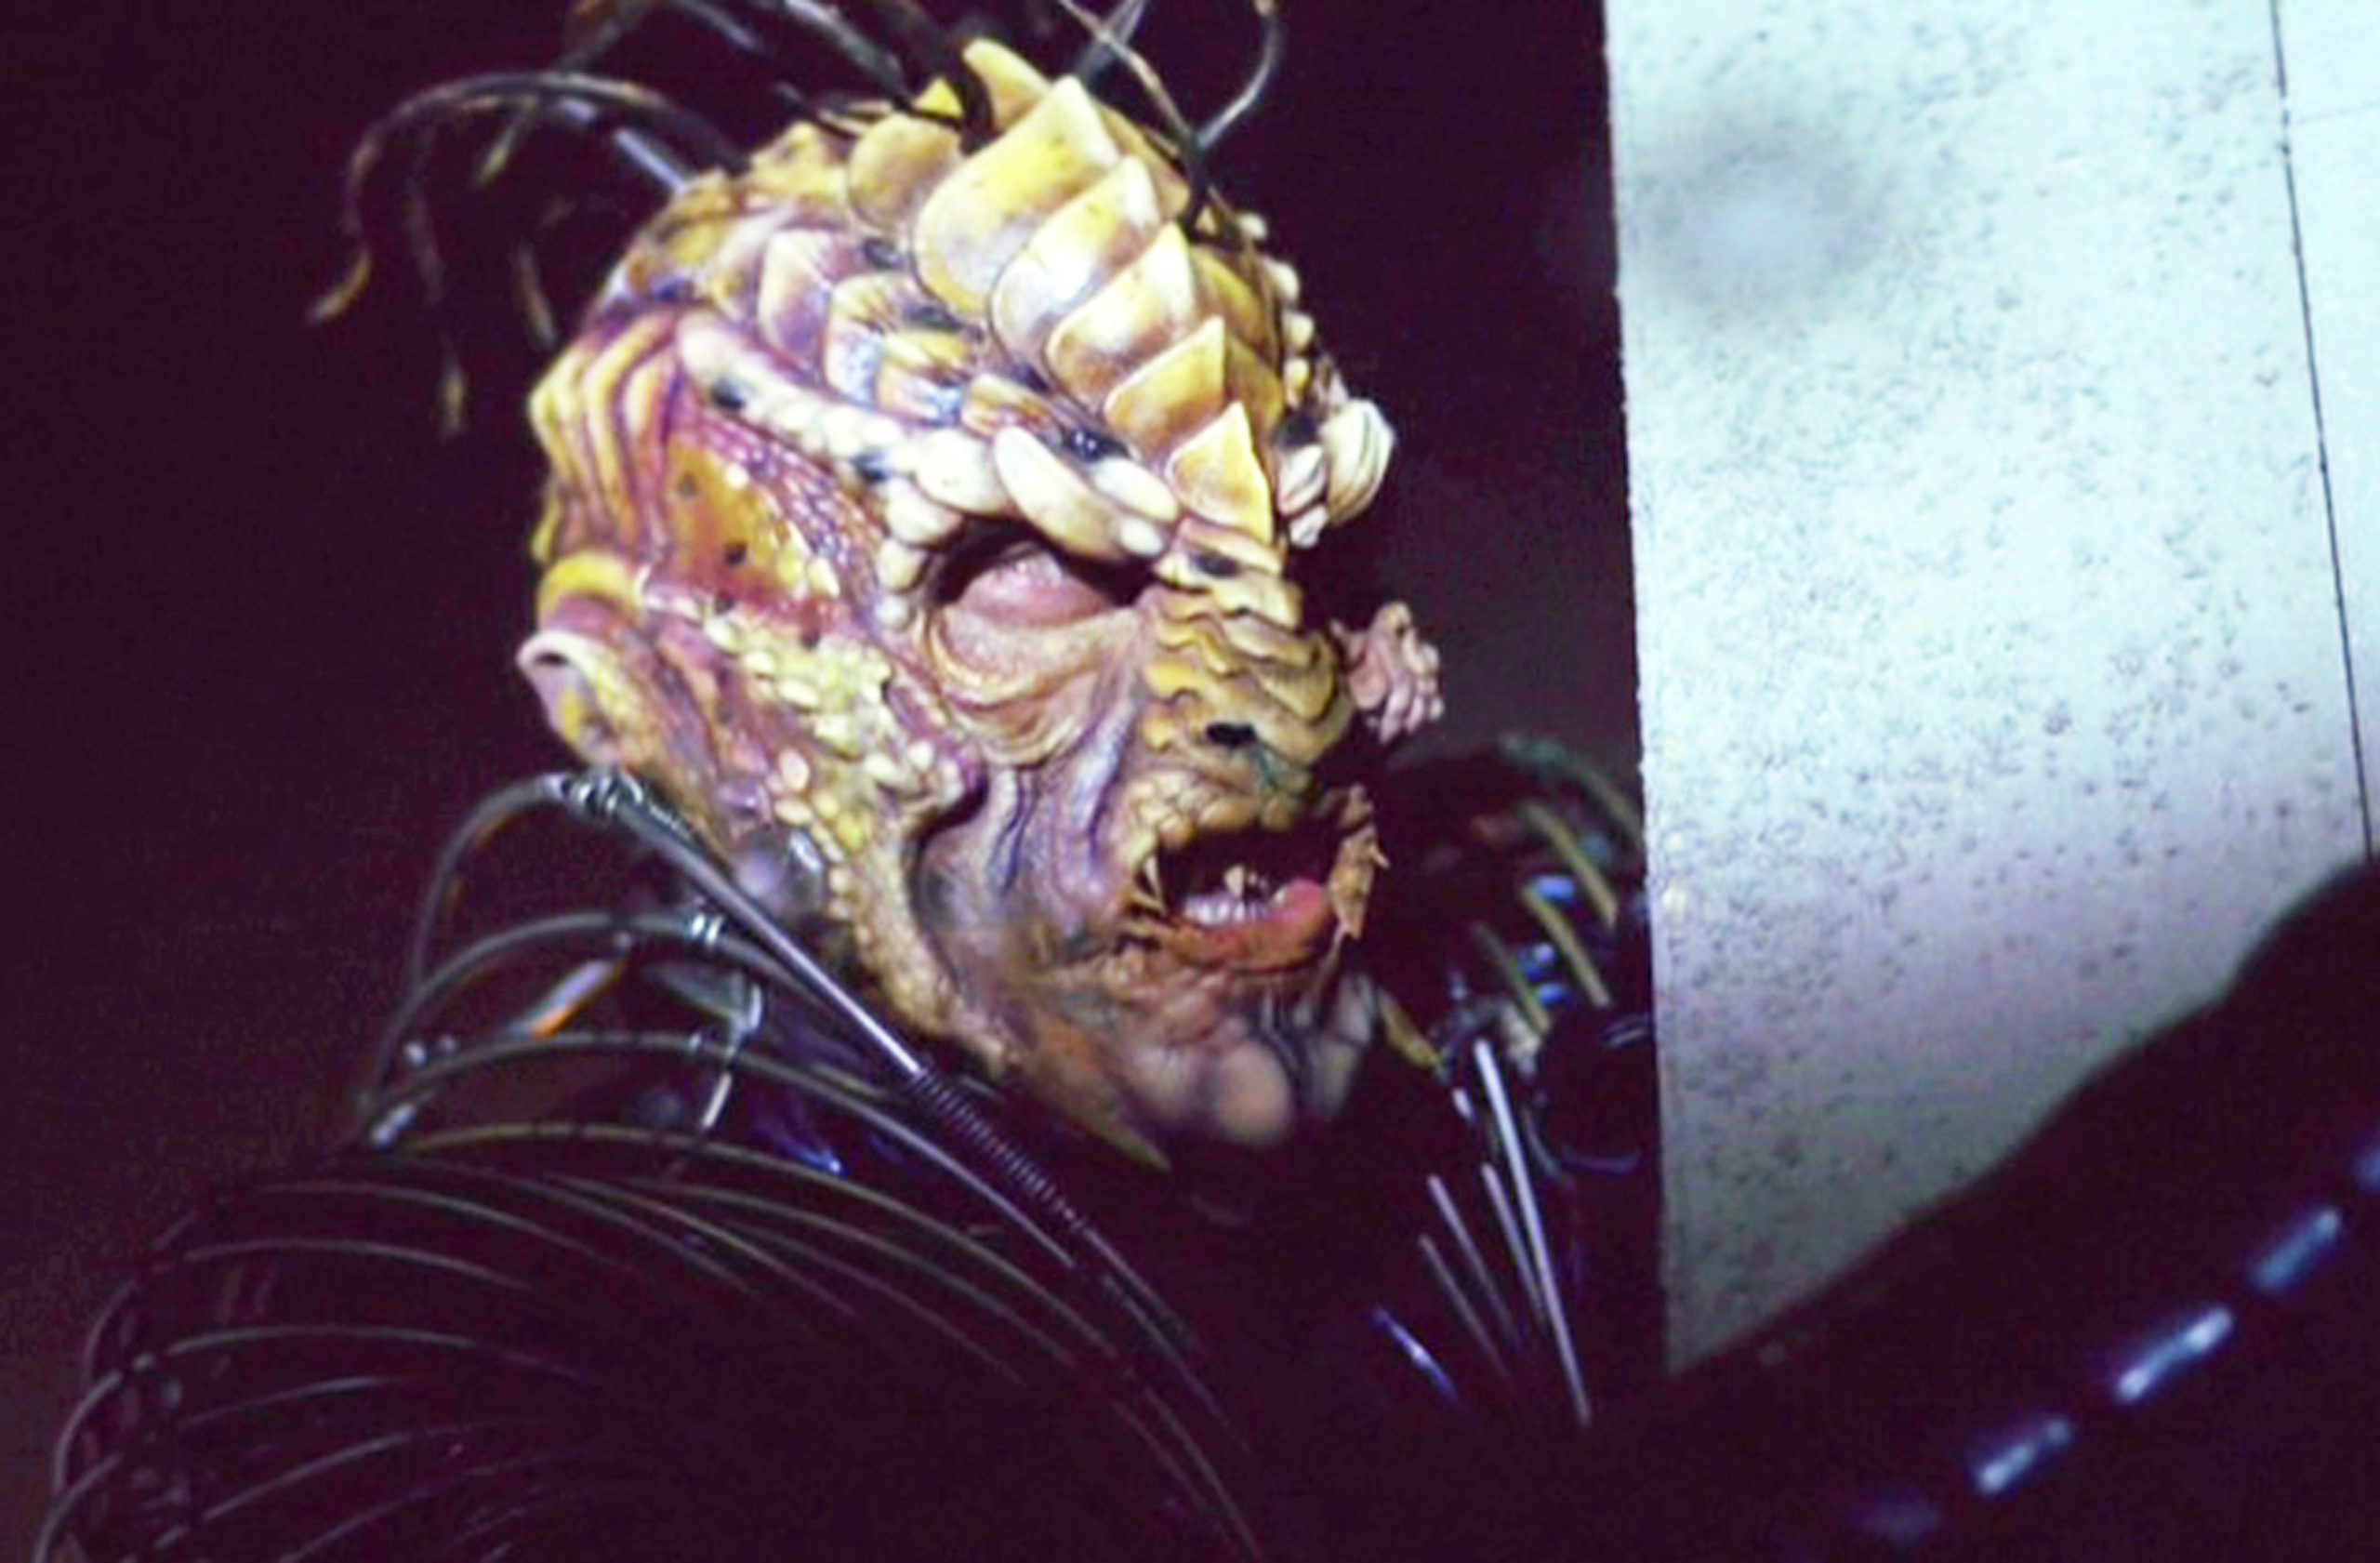 Jeffrey Dean Morgan in the 'Carpenter Street' episode of Star Trek Enterprise as Xindi-Reptilian